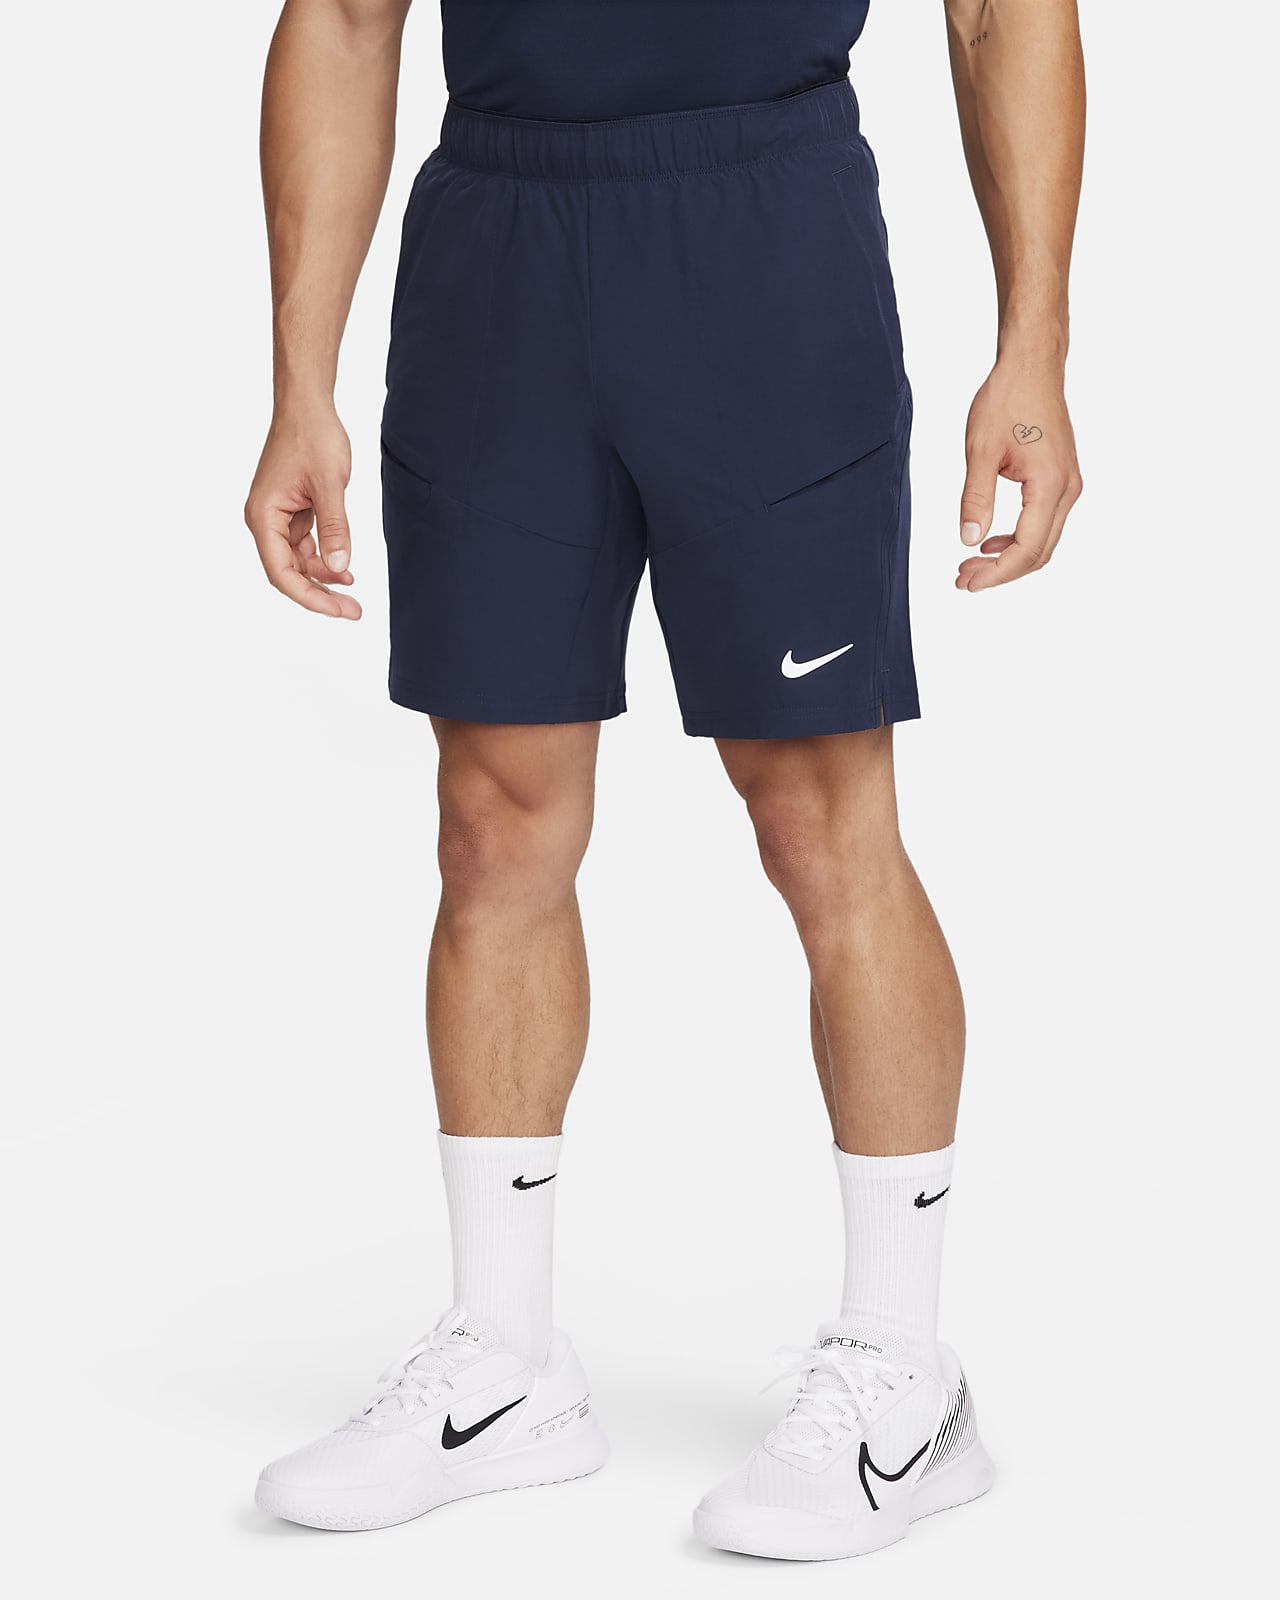 NikeCourt Advantage Herren-Tennisshorts (ca. 23 cm)